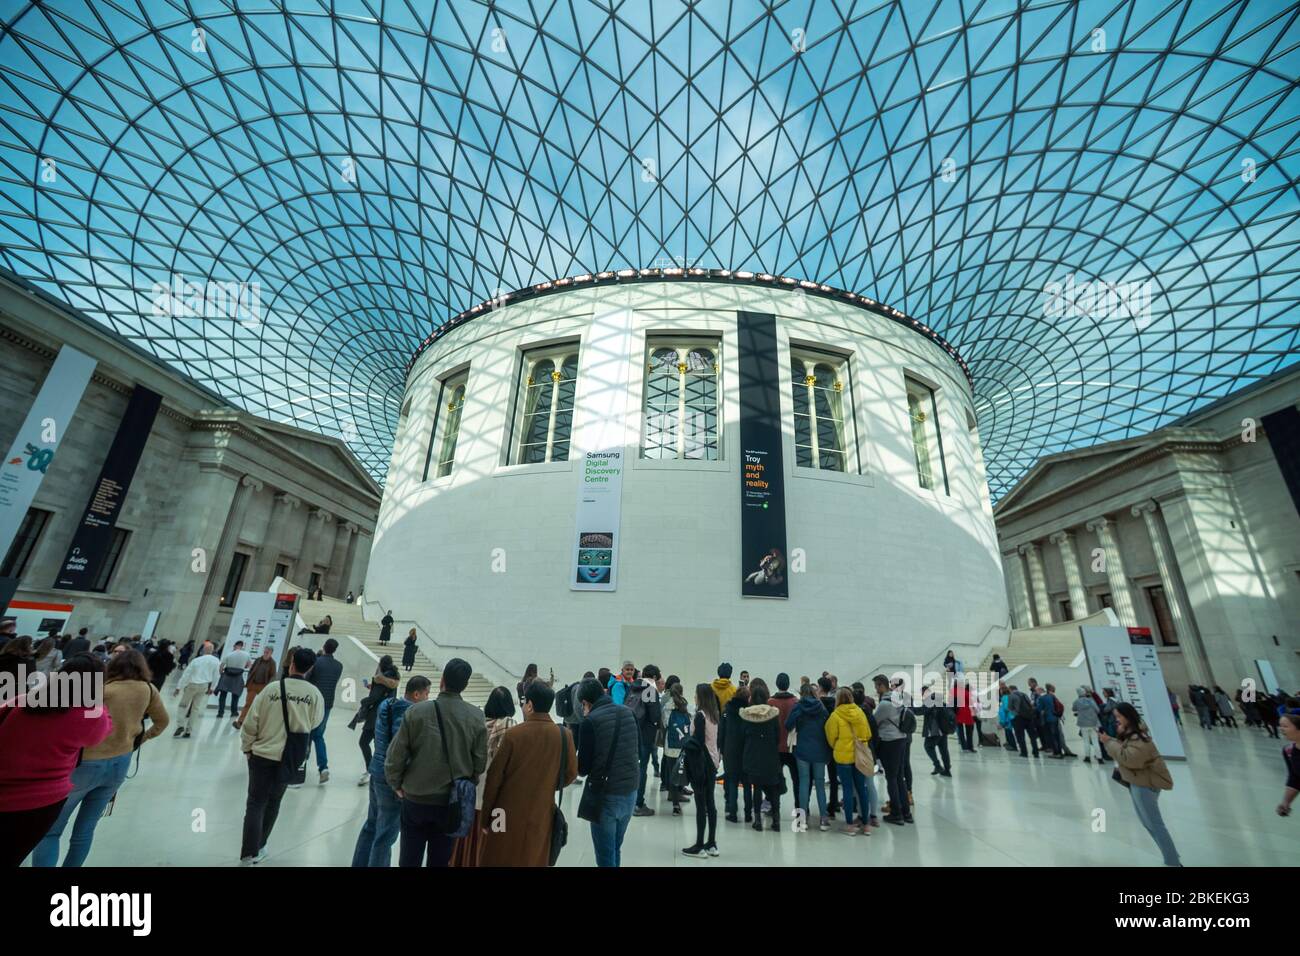 Queen Elizabeth II Great court, British Museum, Londres, Royaume-Uni Banque D'Images